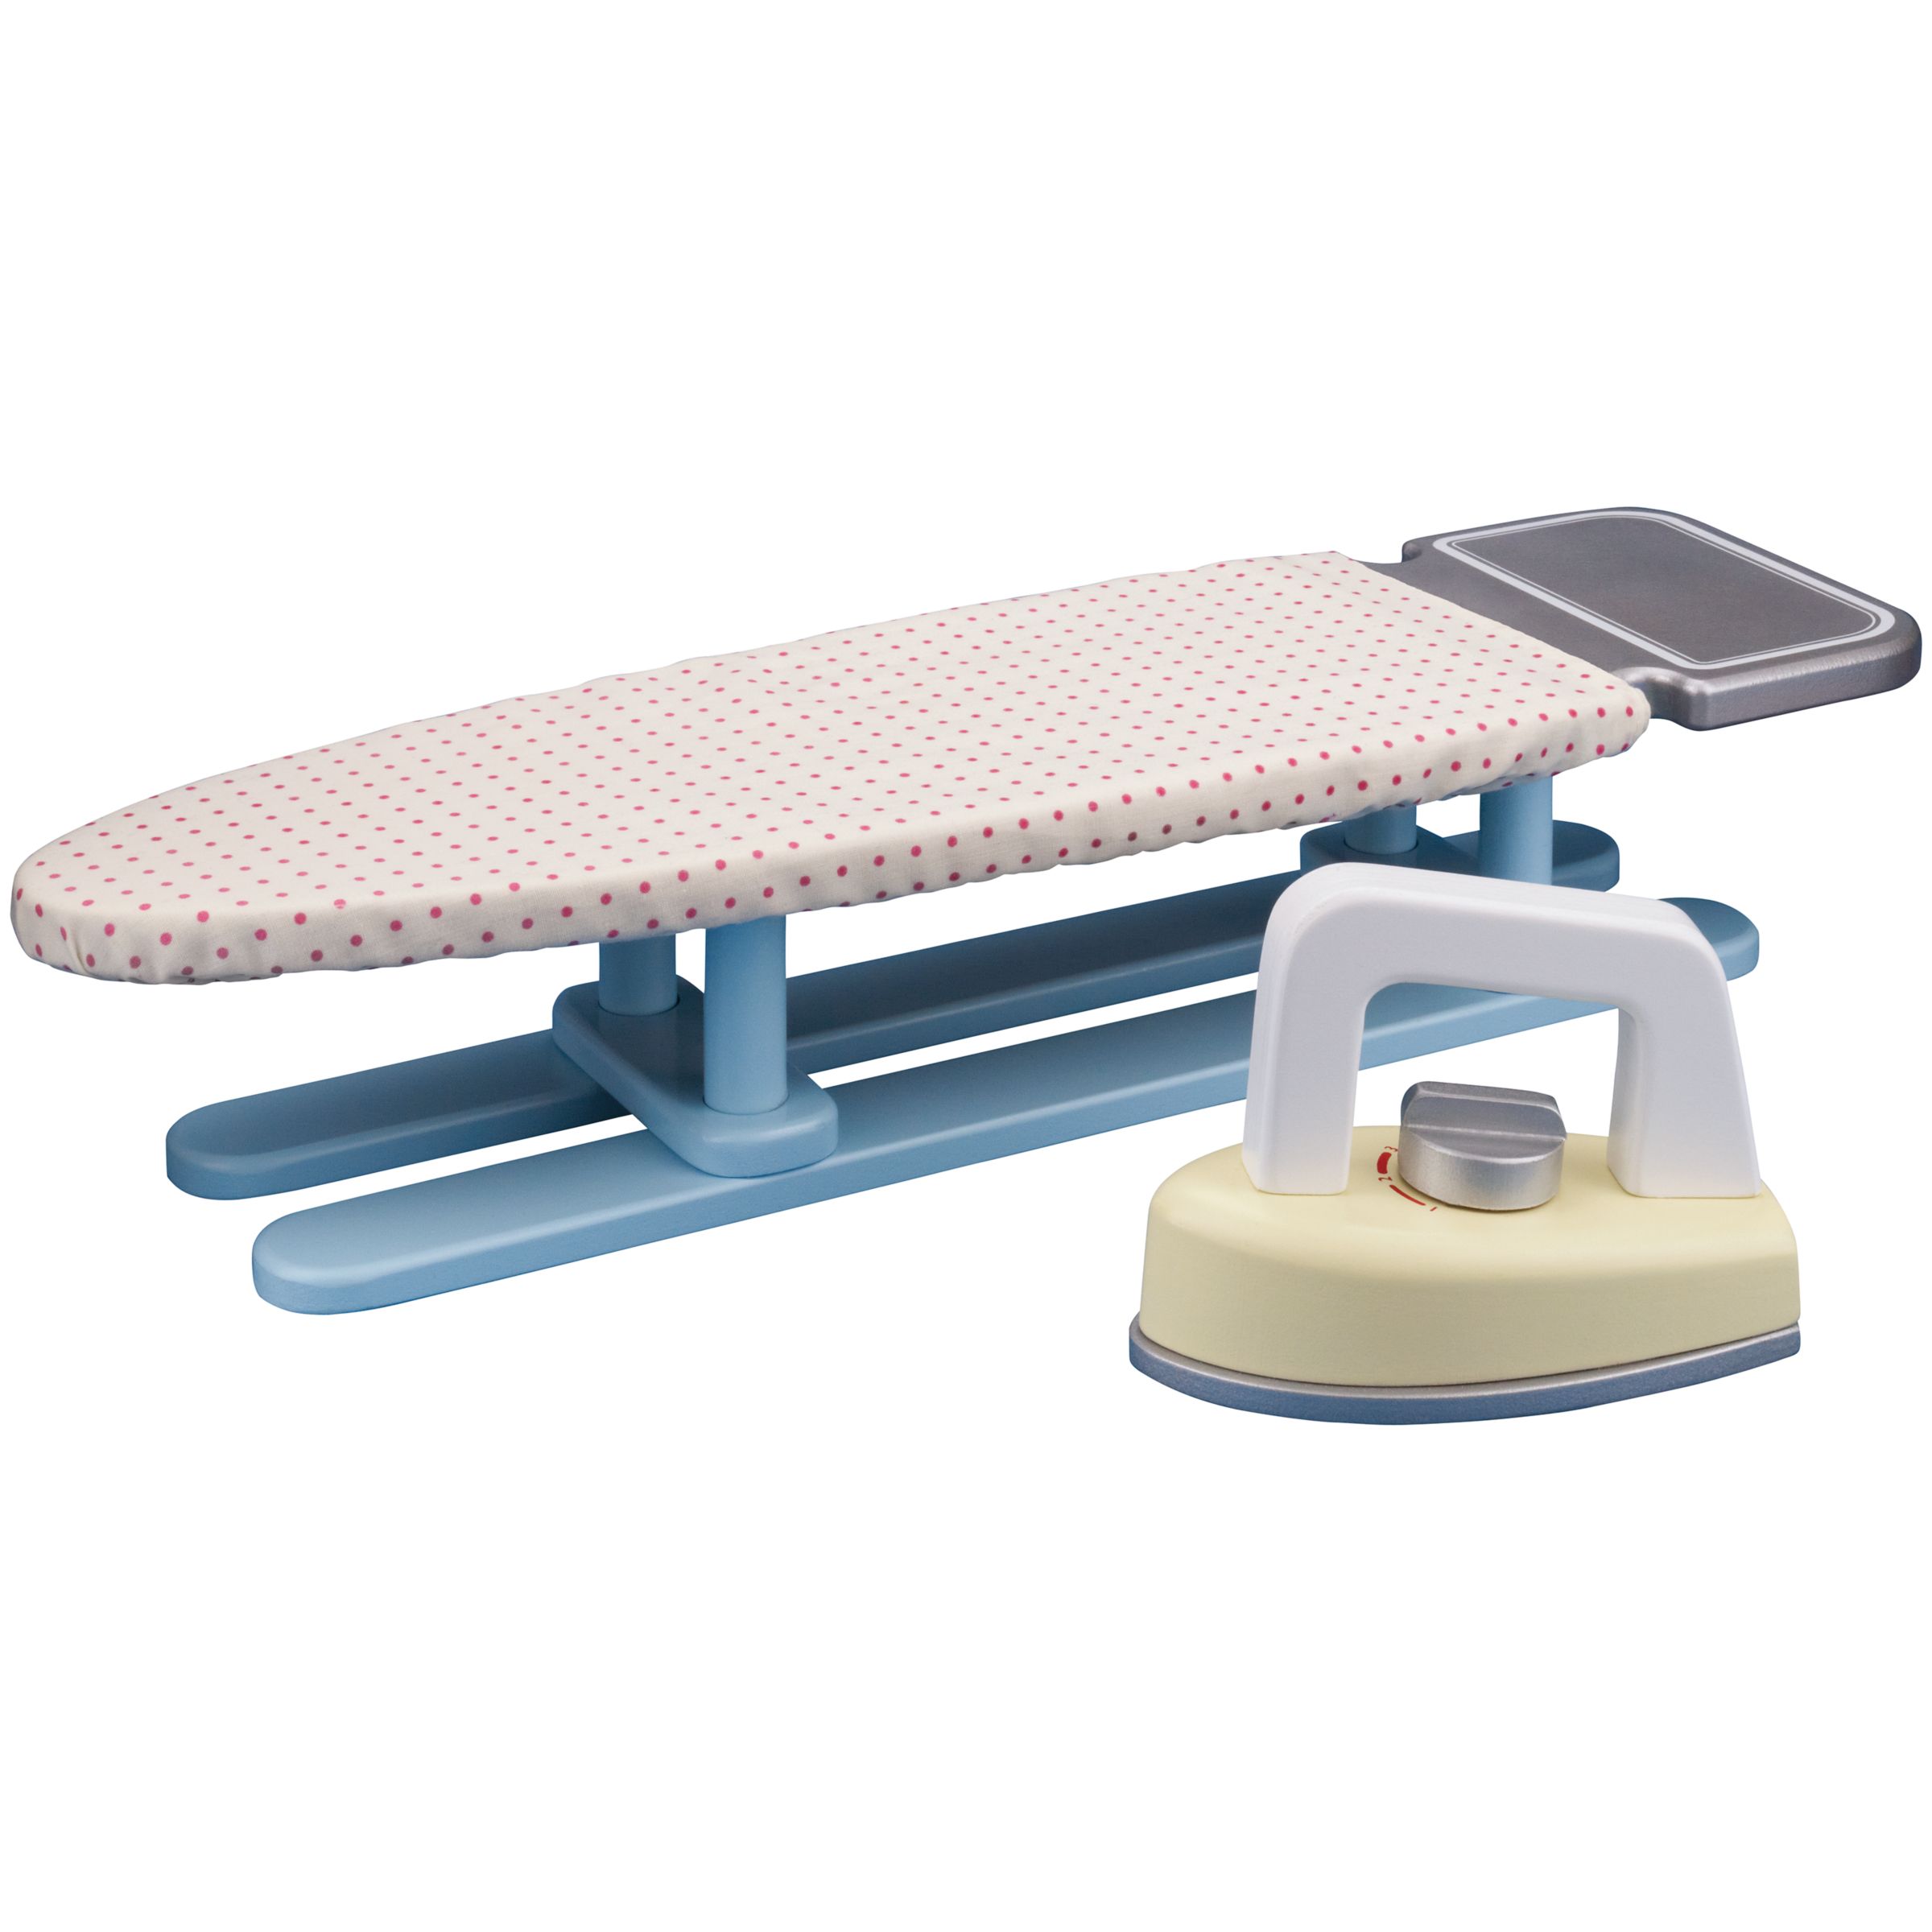 ironing board playset